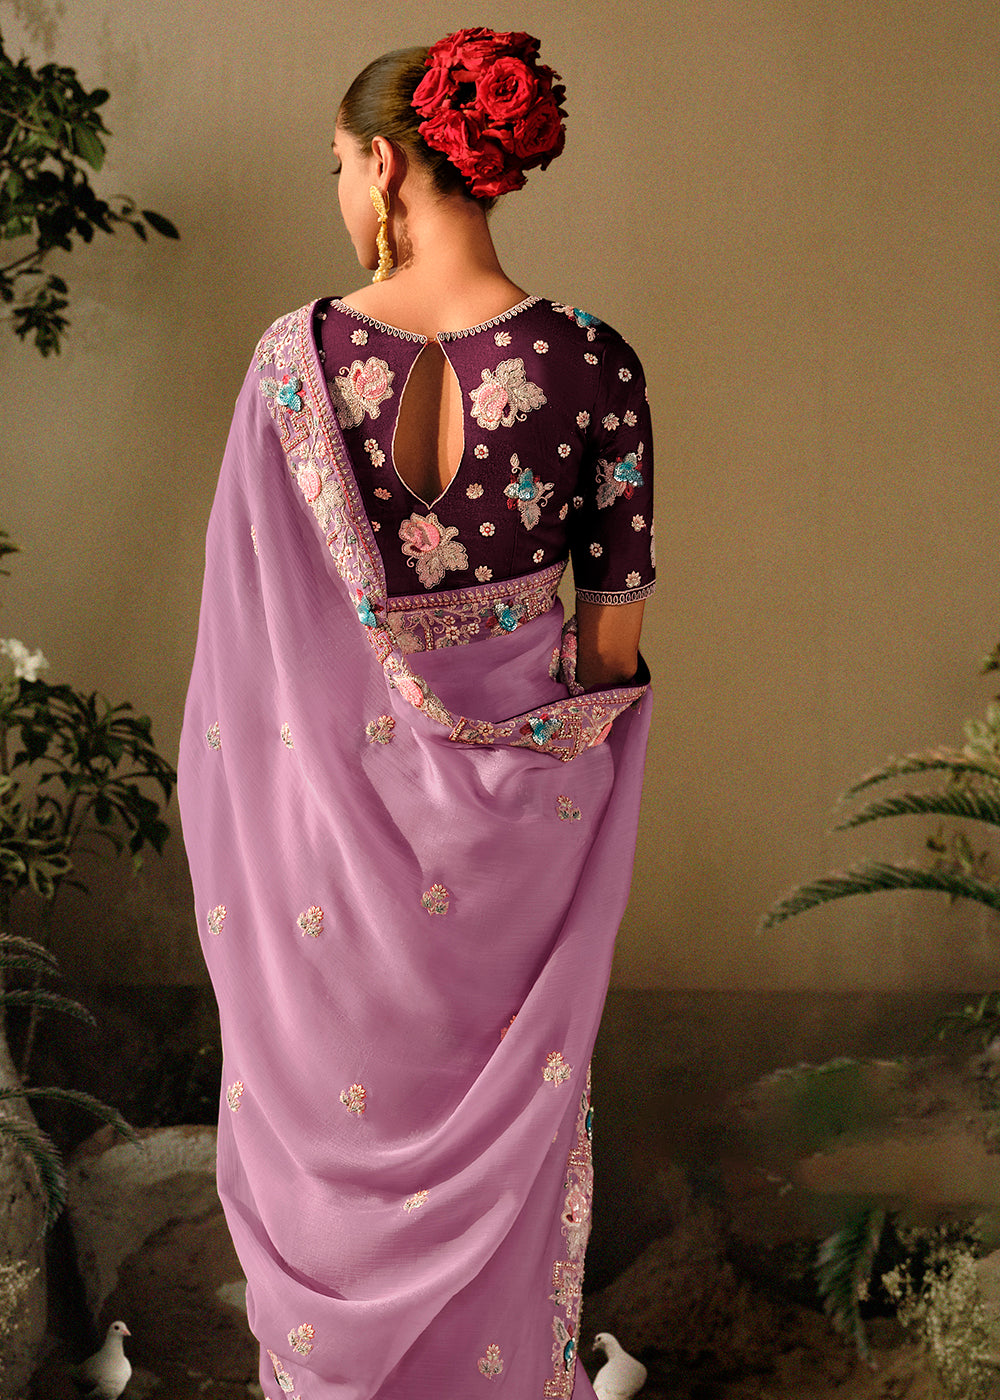 Buy Now Lilac Pink Khatli Work Embroidered Designer Wedding Saree Online in USA, UK, Canada & Worldwide at Empress Clothing.